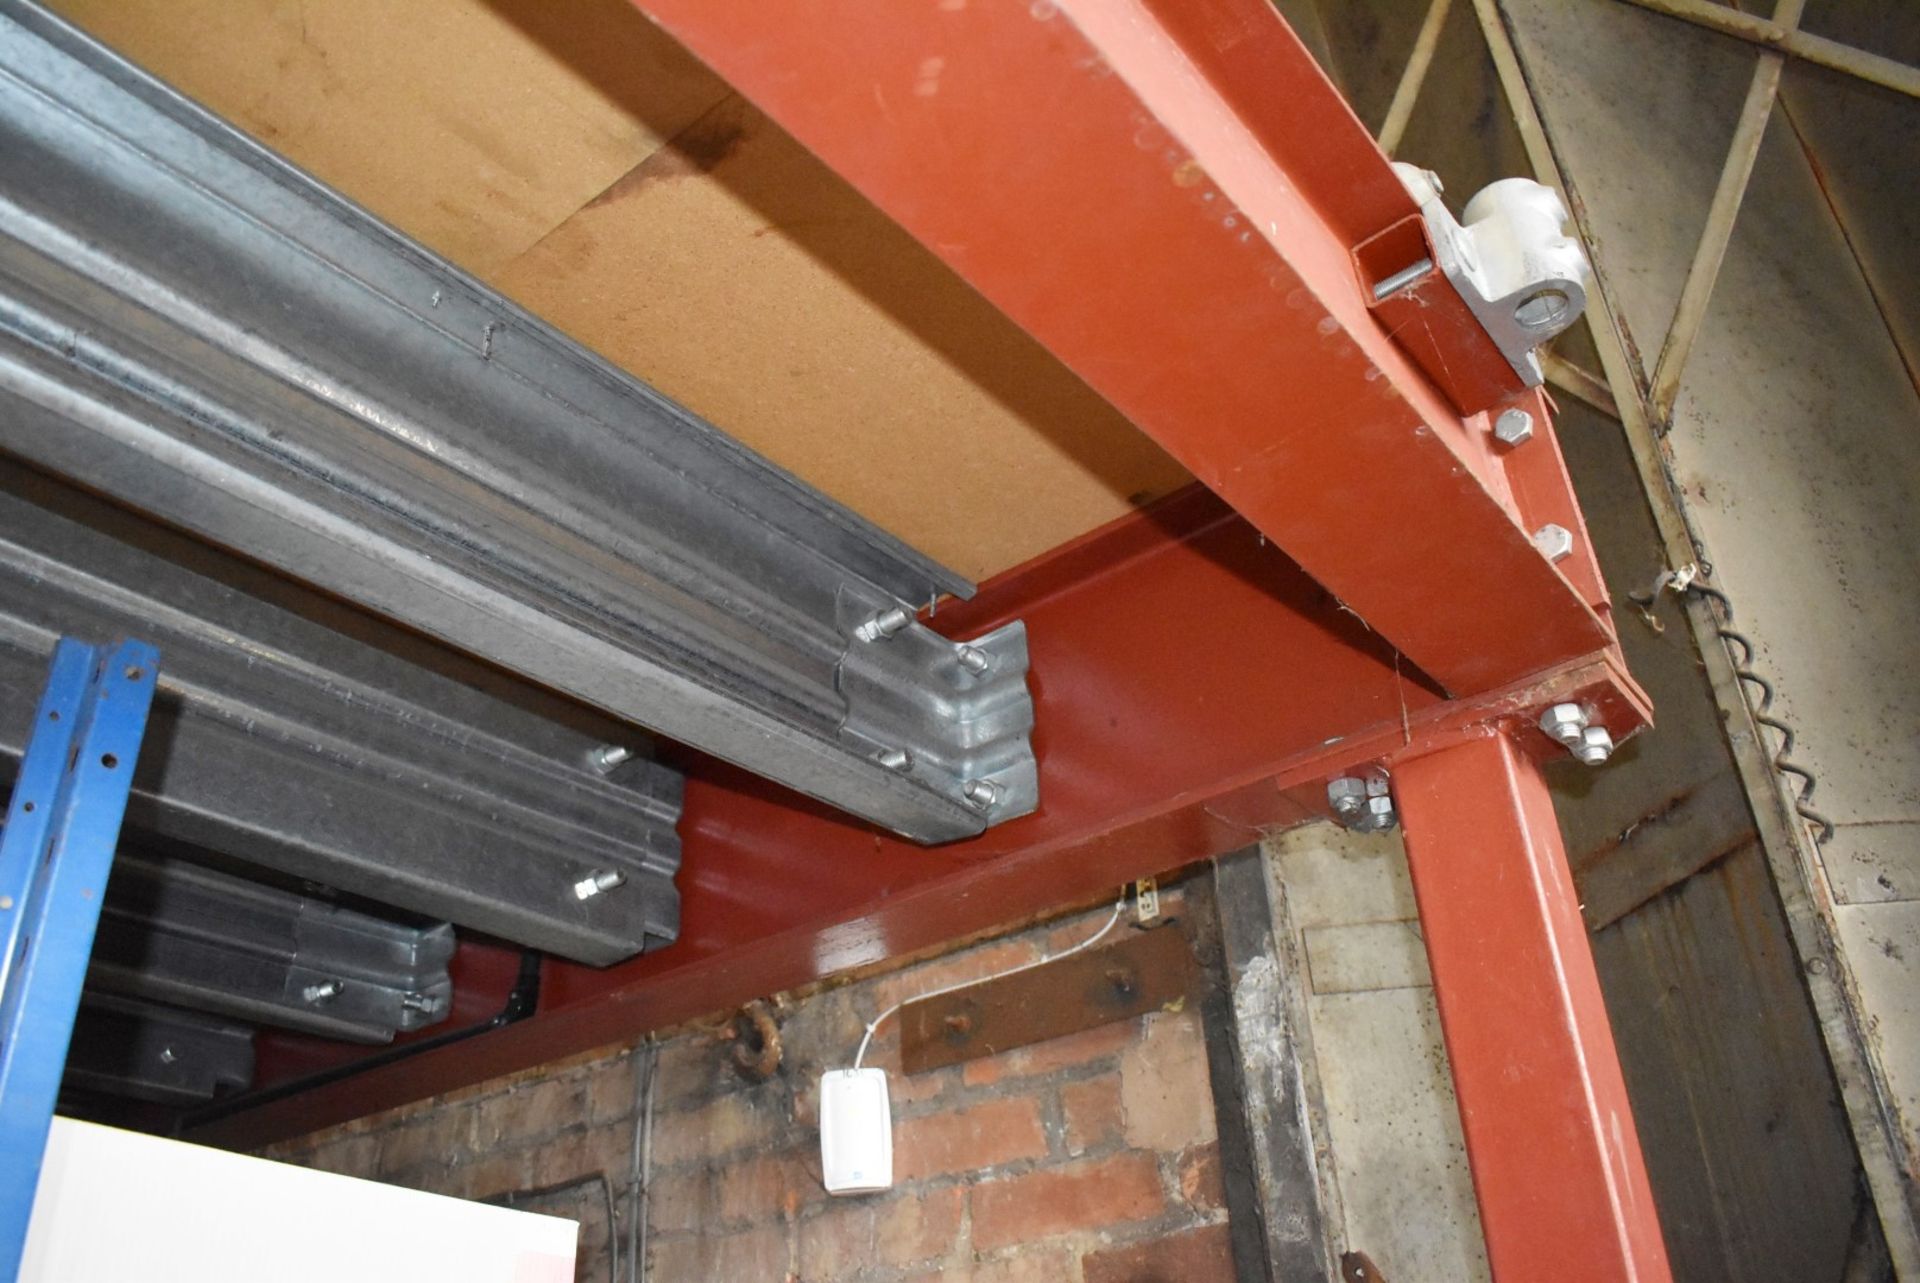 1 x Mezzanine Floor - Heavy Duty Steel Construction With Access Ladder - Size: W1000 x D325 cms - Image 10 of 18